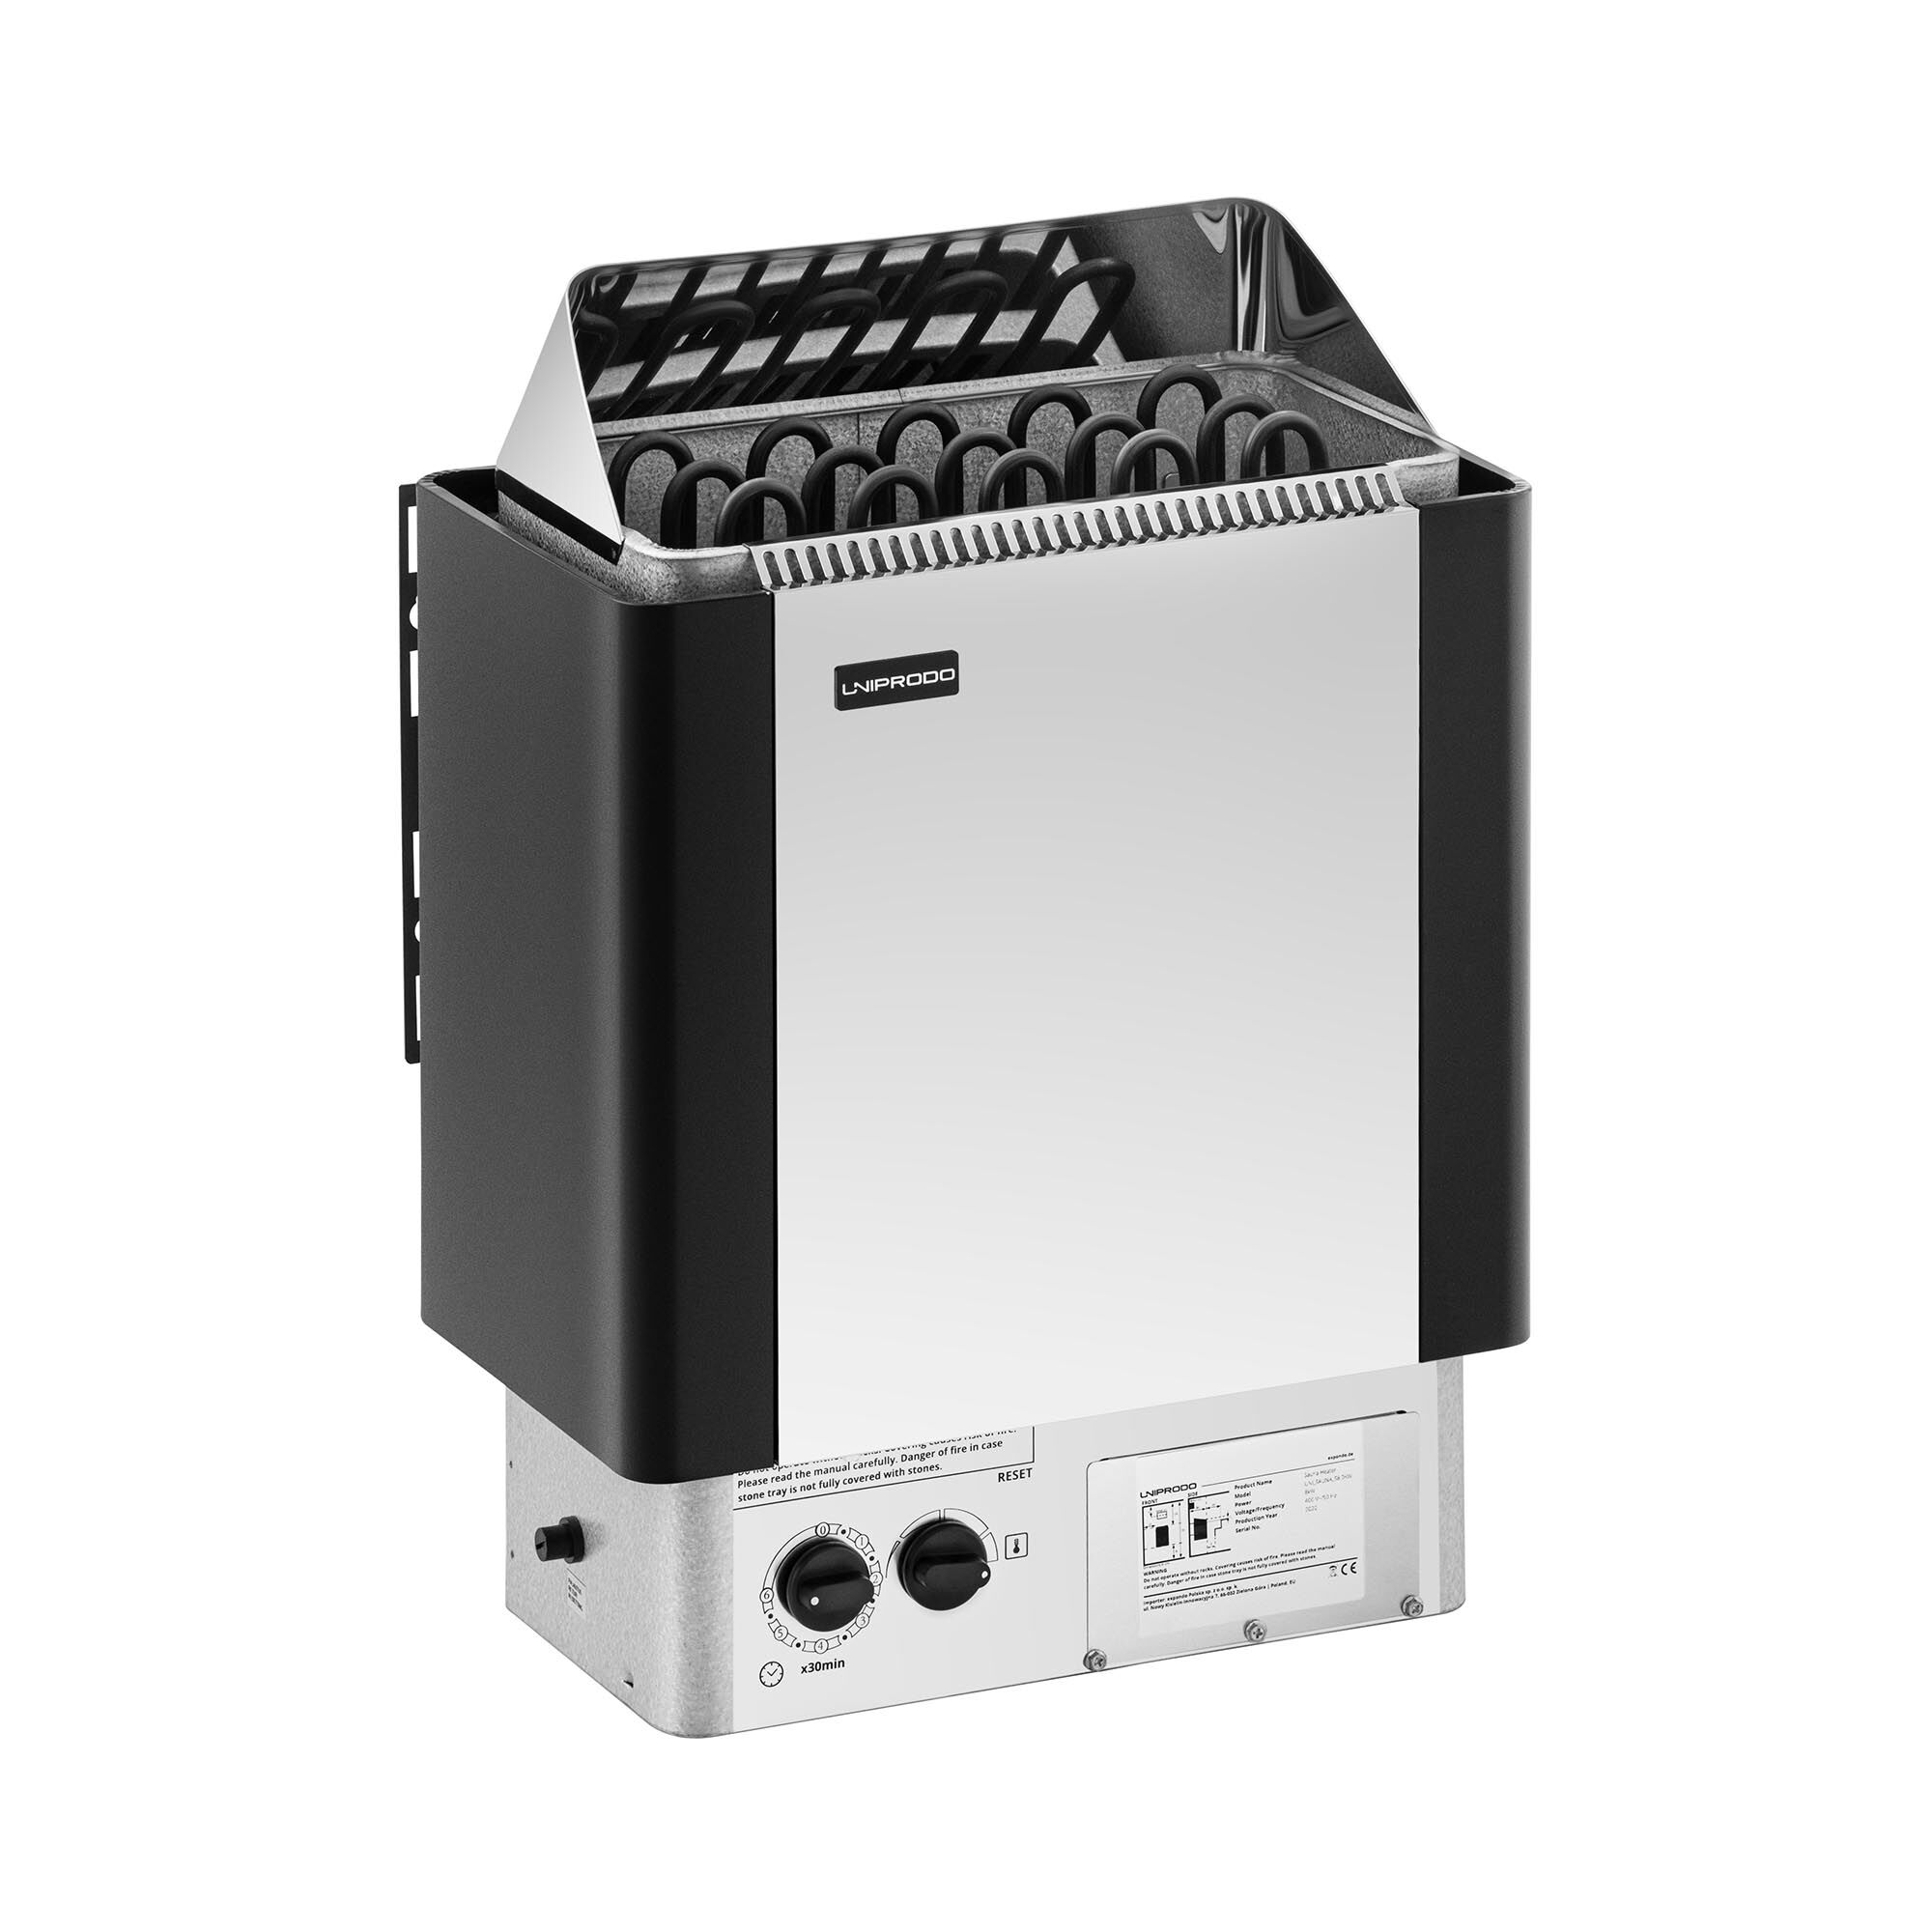 Uniprodo Saunaovn - 8 kW - 30 til 110 °C - inkl. kontrolpanel